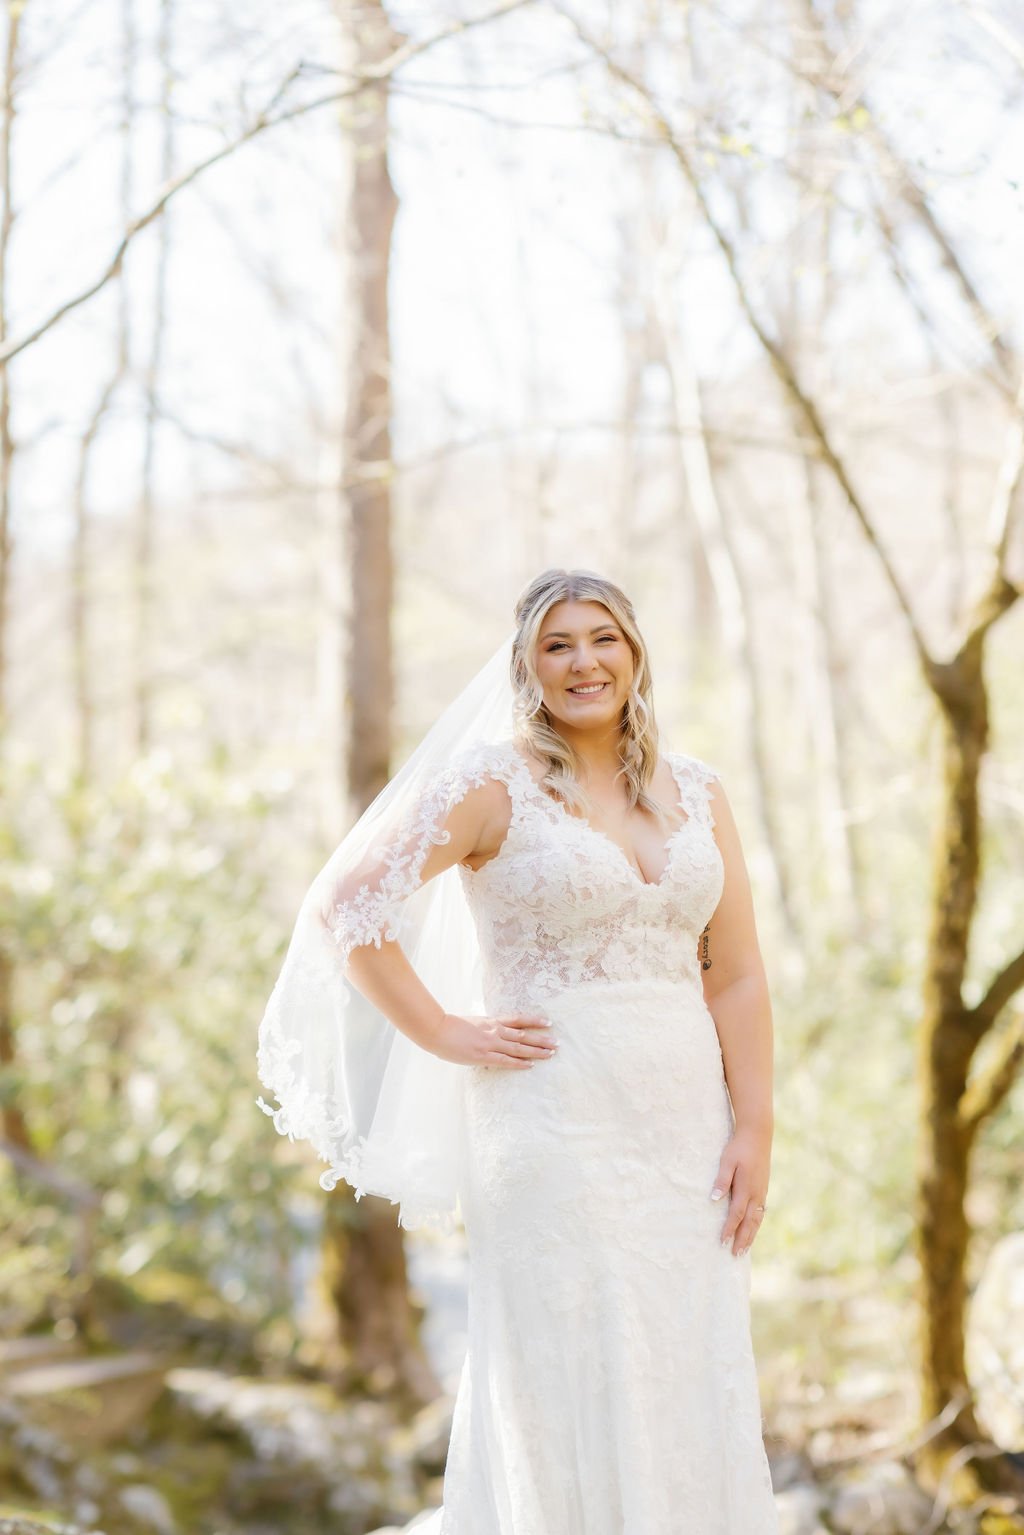 gatlinburg-photographer-tips-for-a-romantic-gatlinburg-elopement-ceremony-wedding-gown